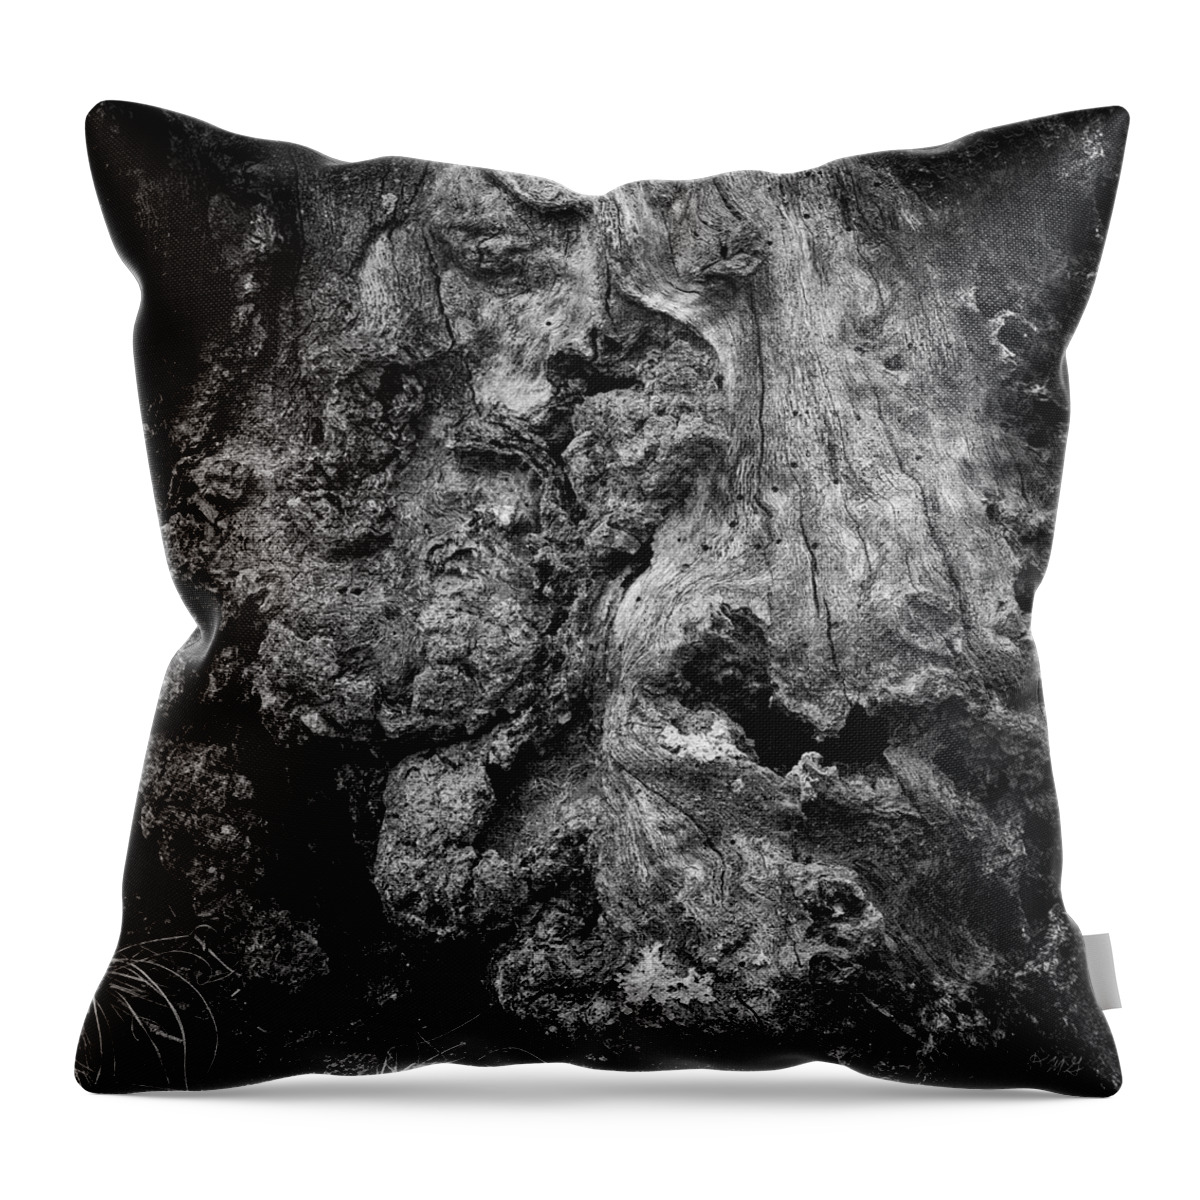 Fine Art Photography Throw Pillow featuring the photograph Boyden XII BW by David Gordon